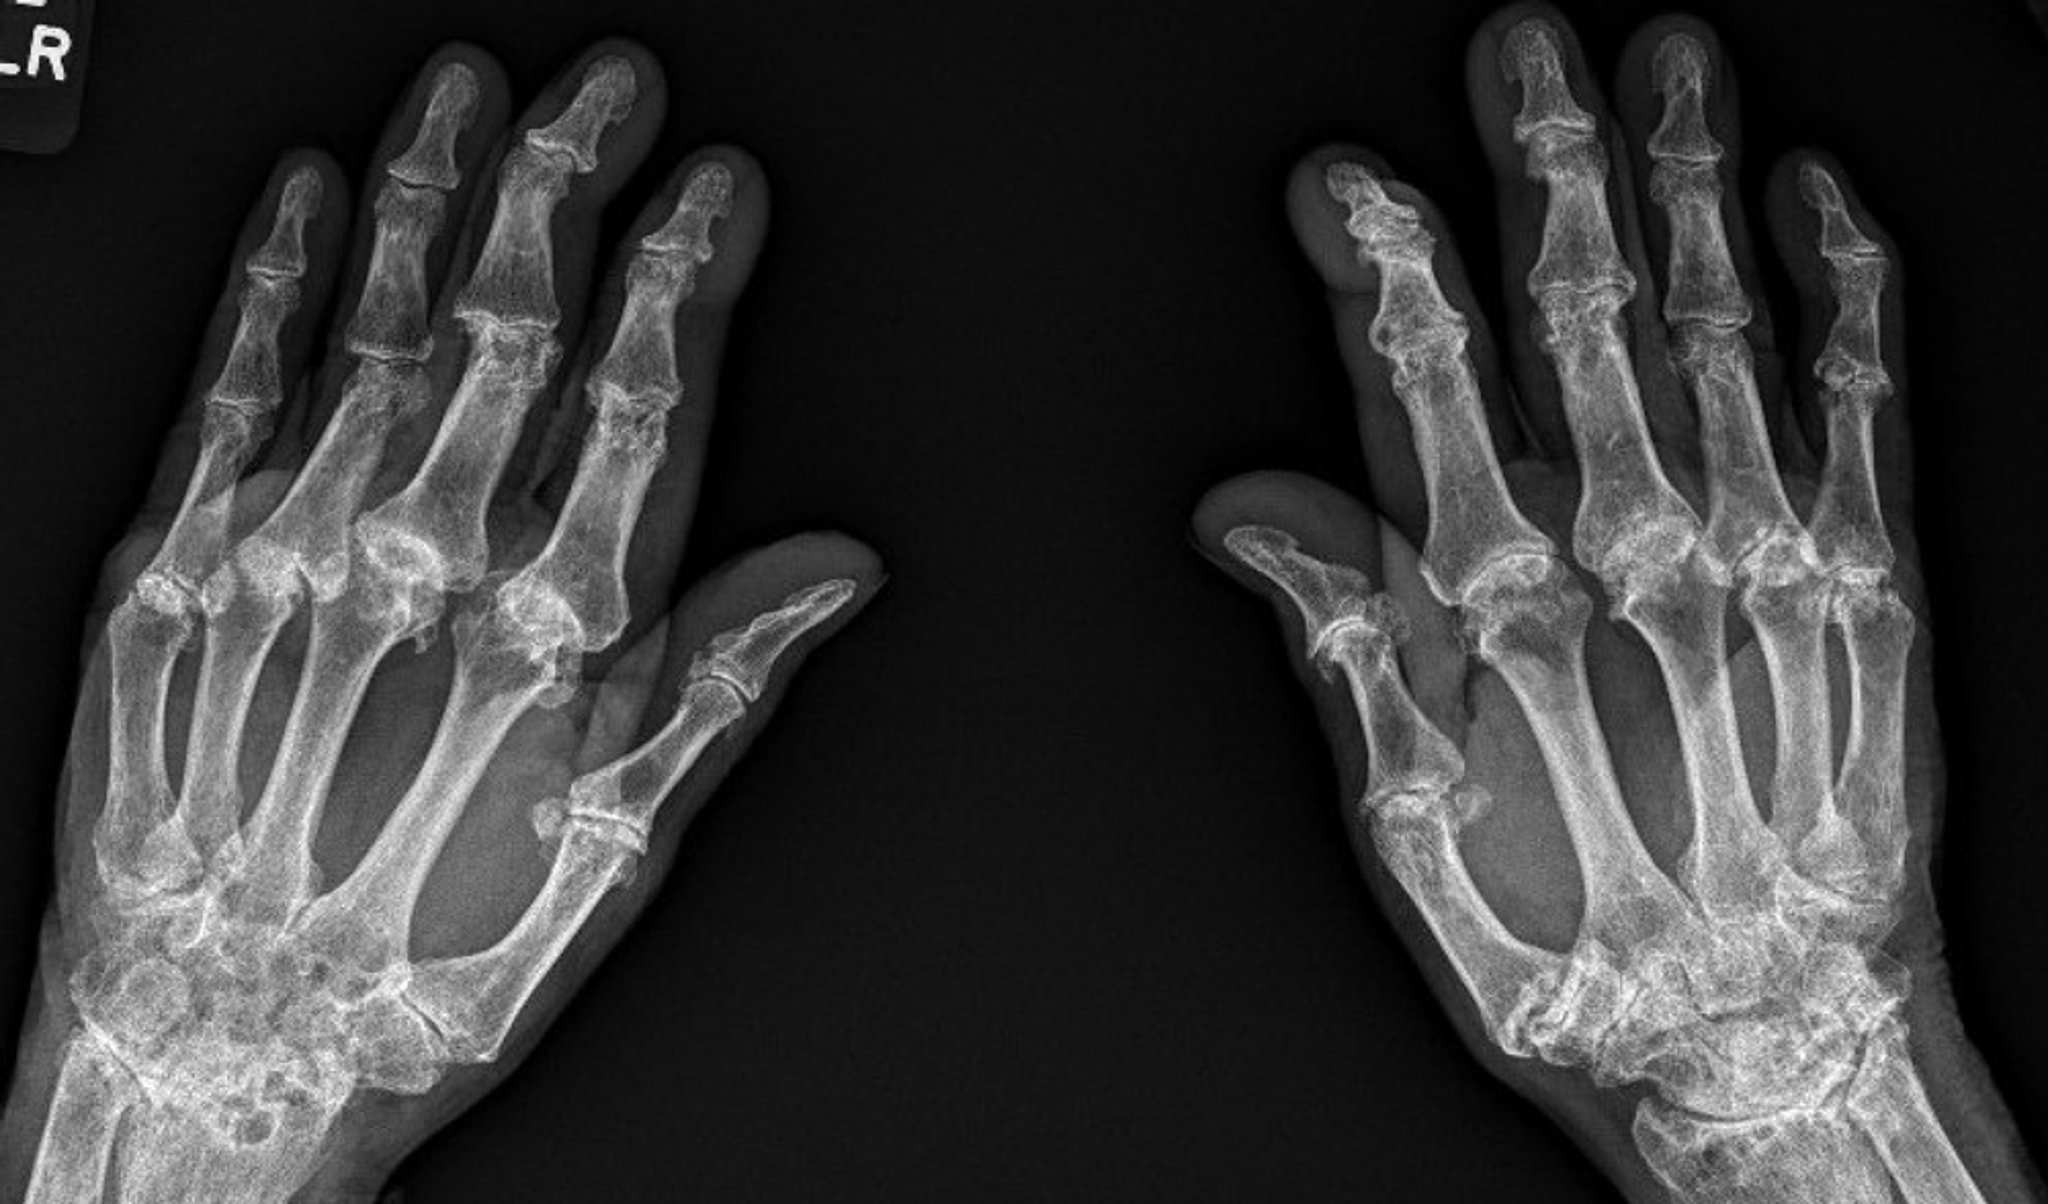 Radiographic Features of Advanced, Destructive Rheumatoid Arthritis